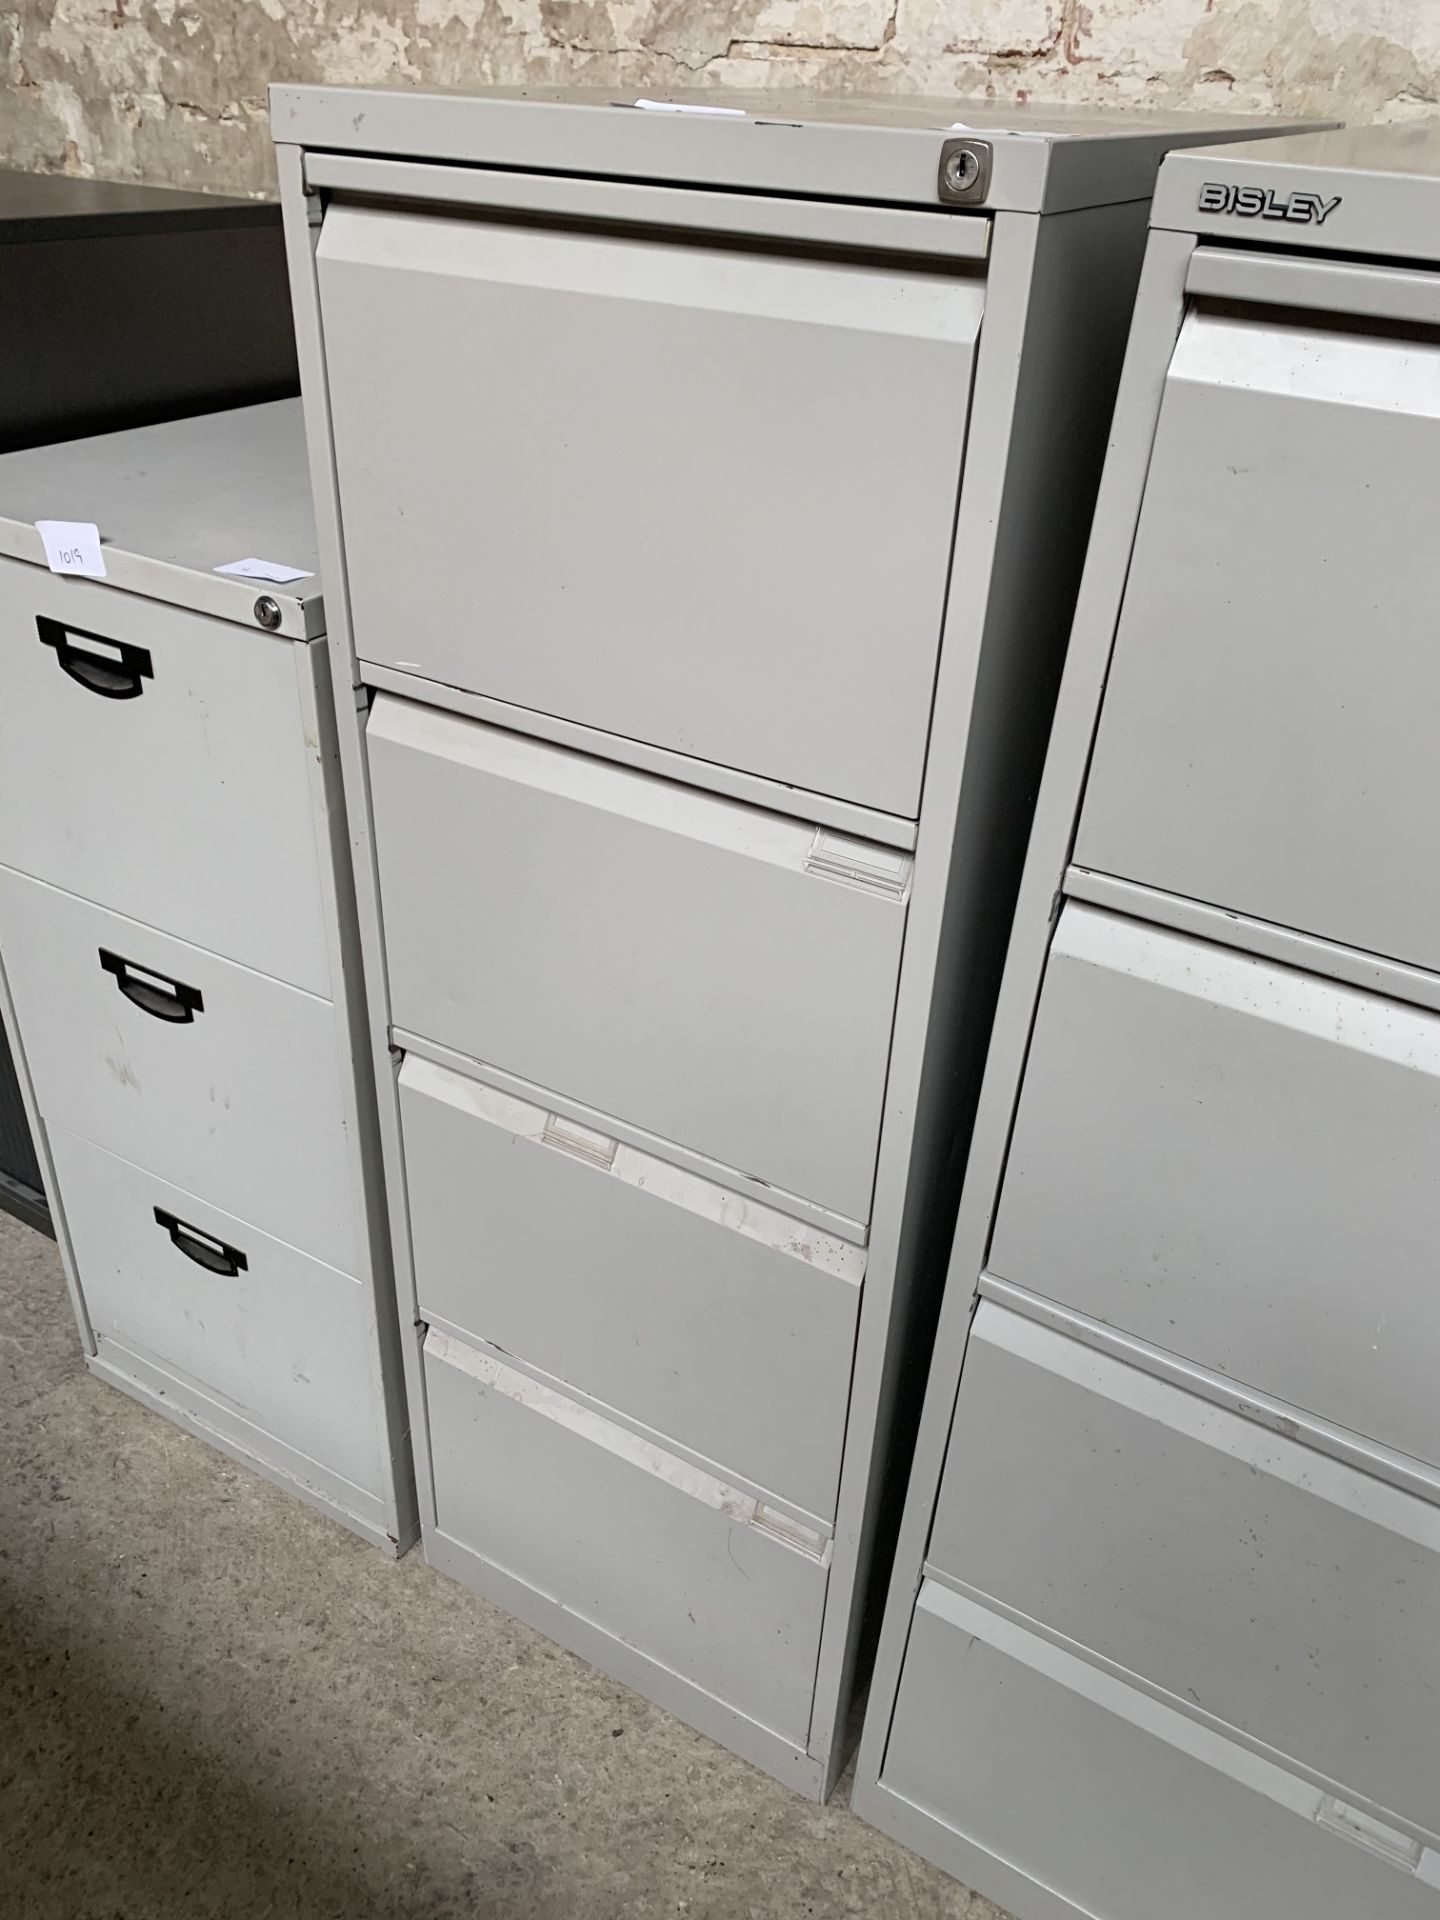 Bisley 4 drawer filing cabinet, 47 x 62 x 132cms.